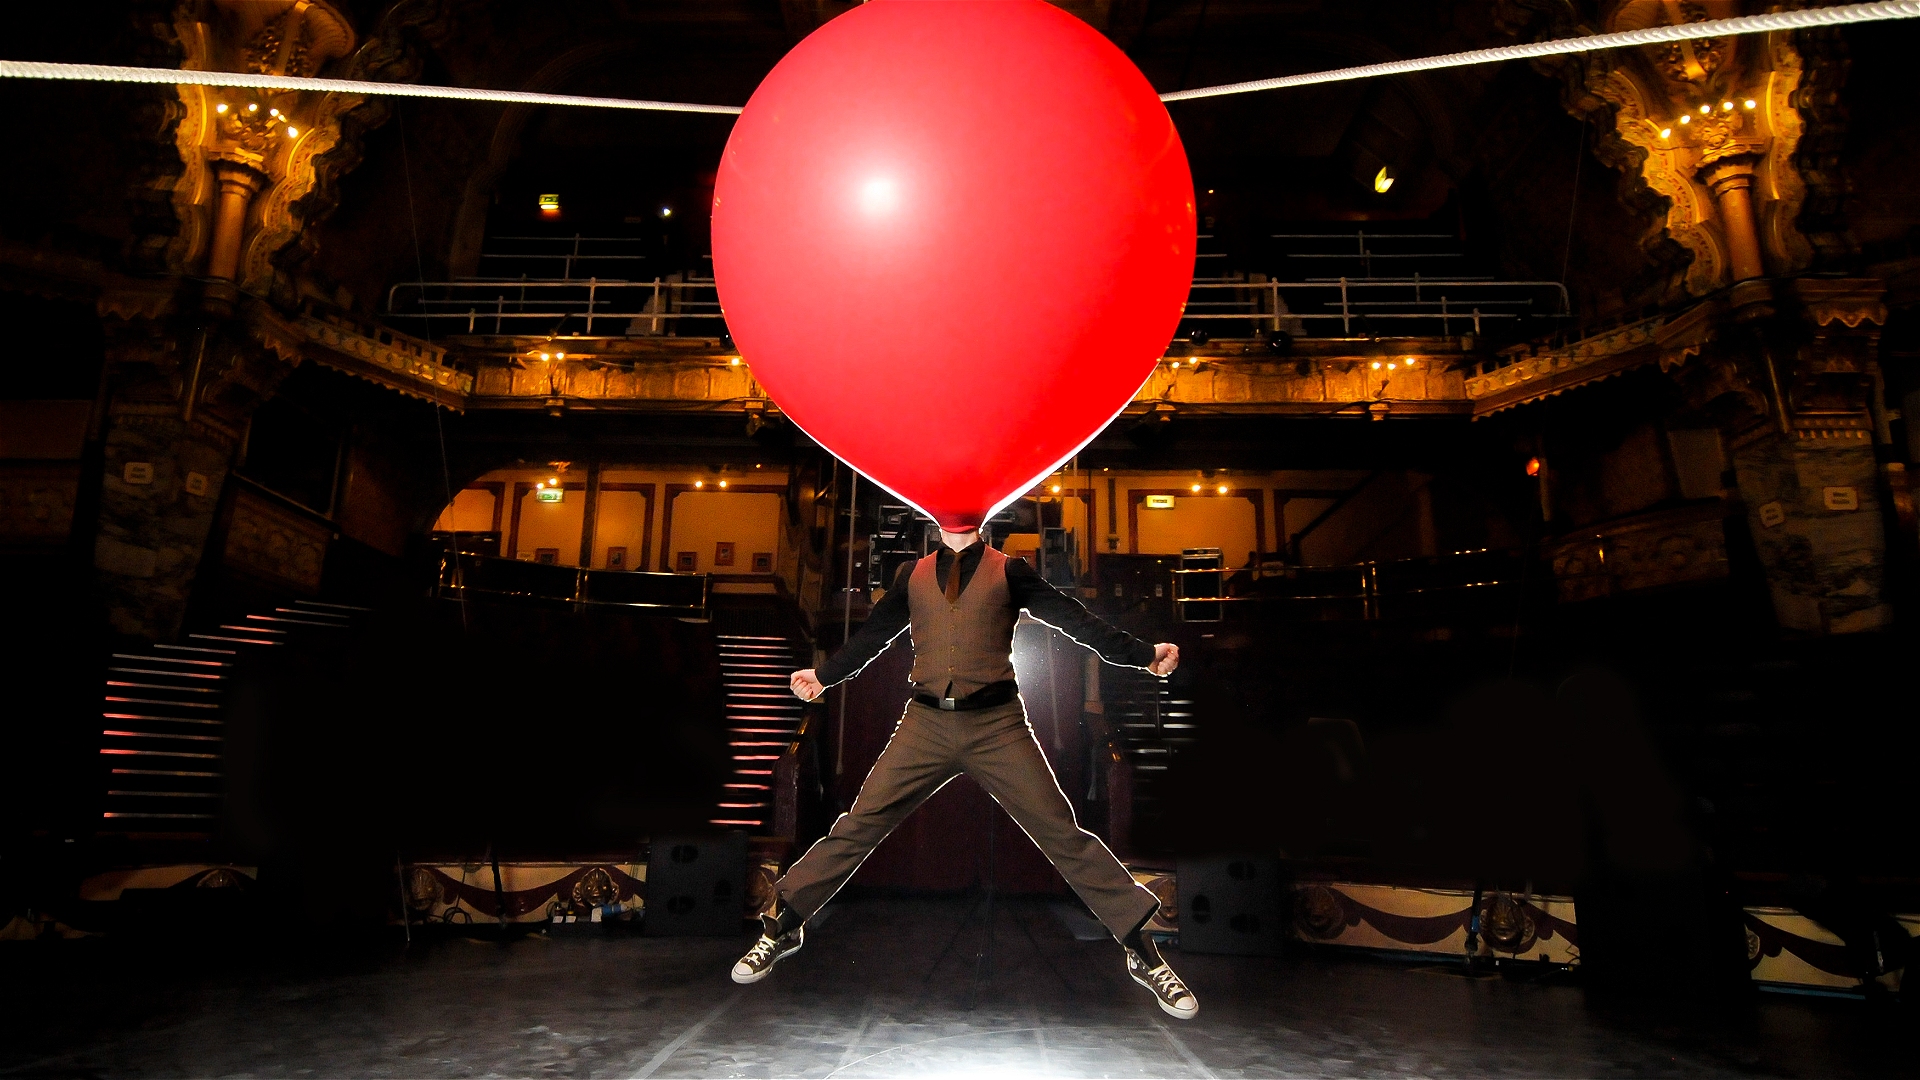 Licht smokkel galop The Giant Balloon Show - Brighton Fringe